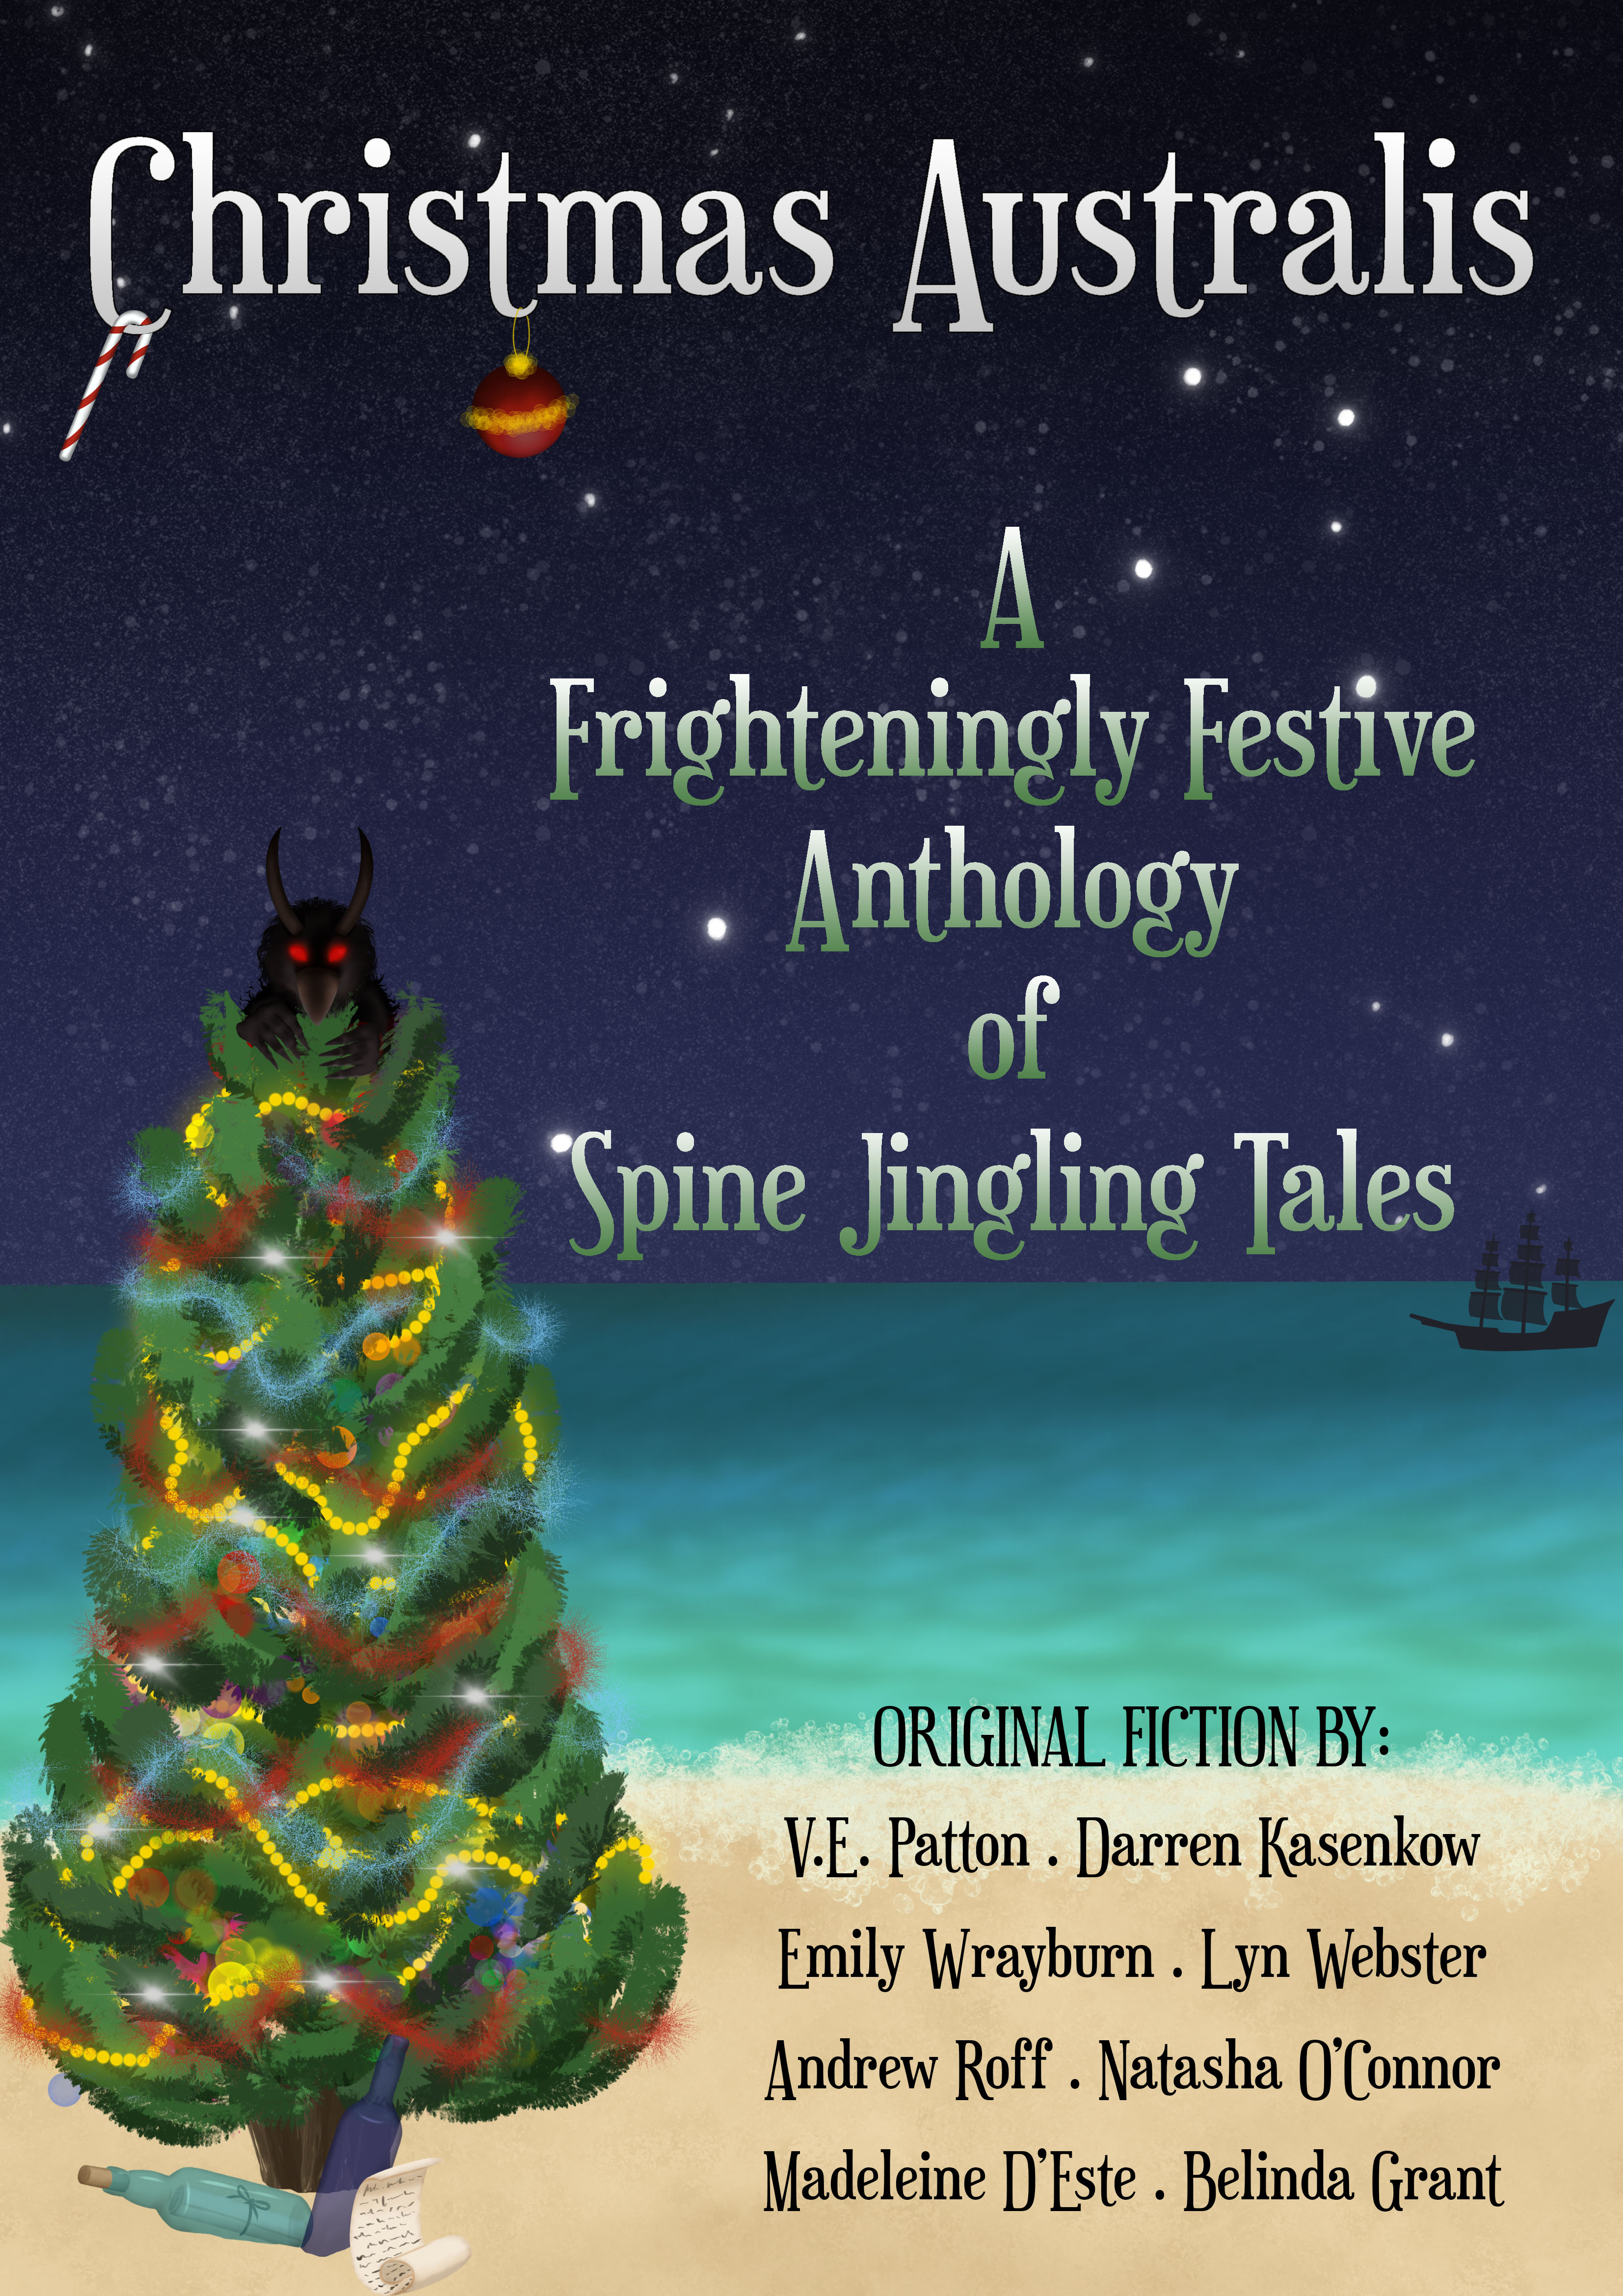 A Frighteningly Festive Anthology of Spine Jingling Tales